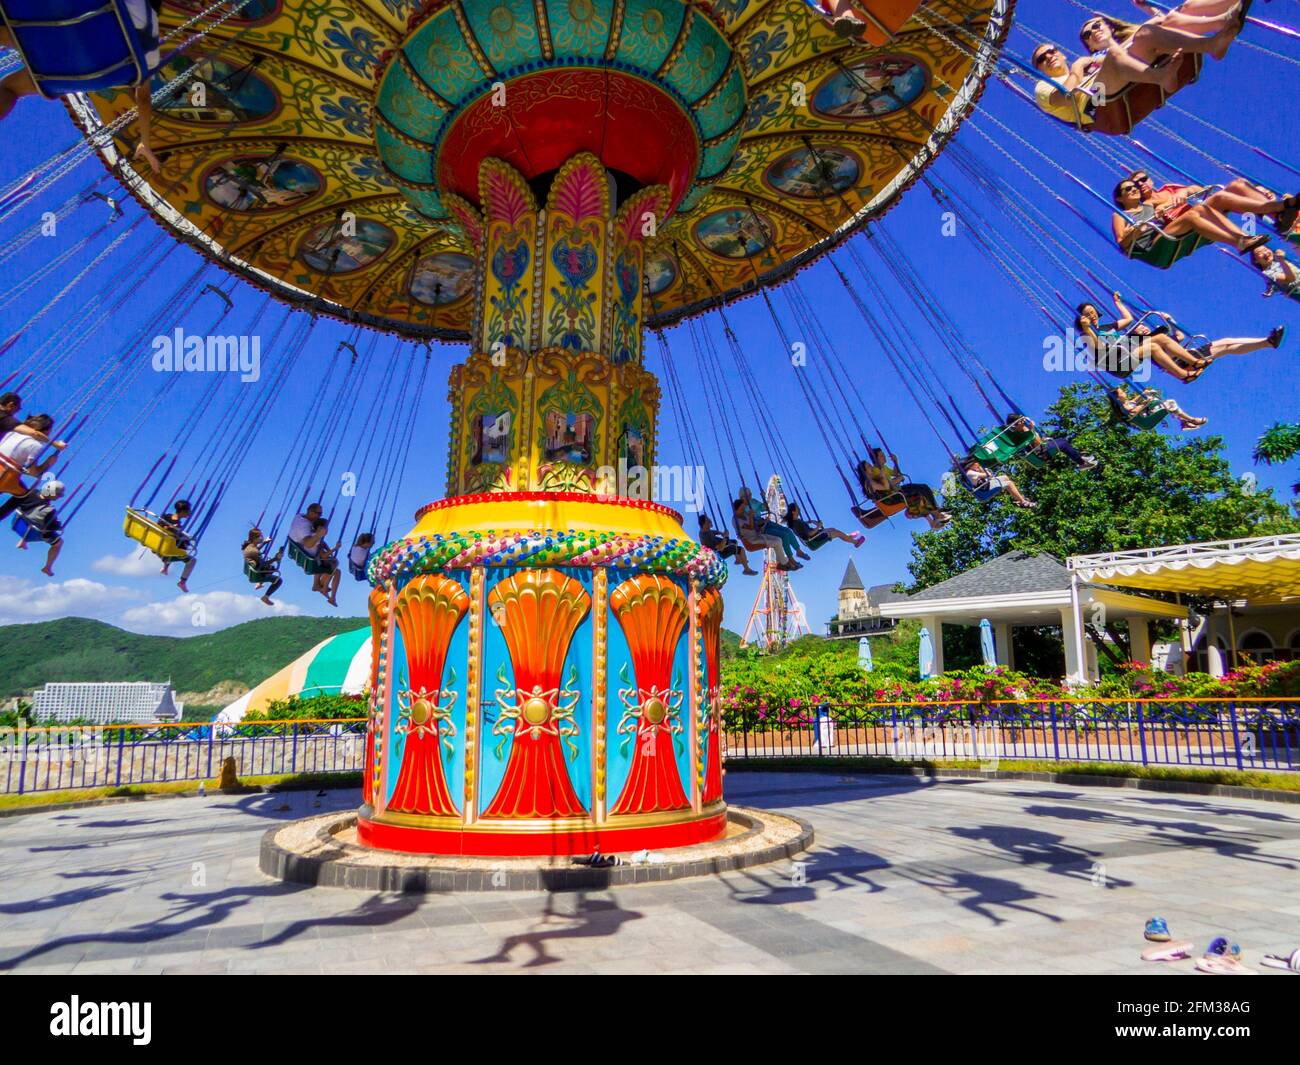 Vinpearl Amusement Park, Nha Trang, Vietnam Stock Photo